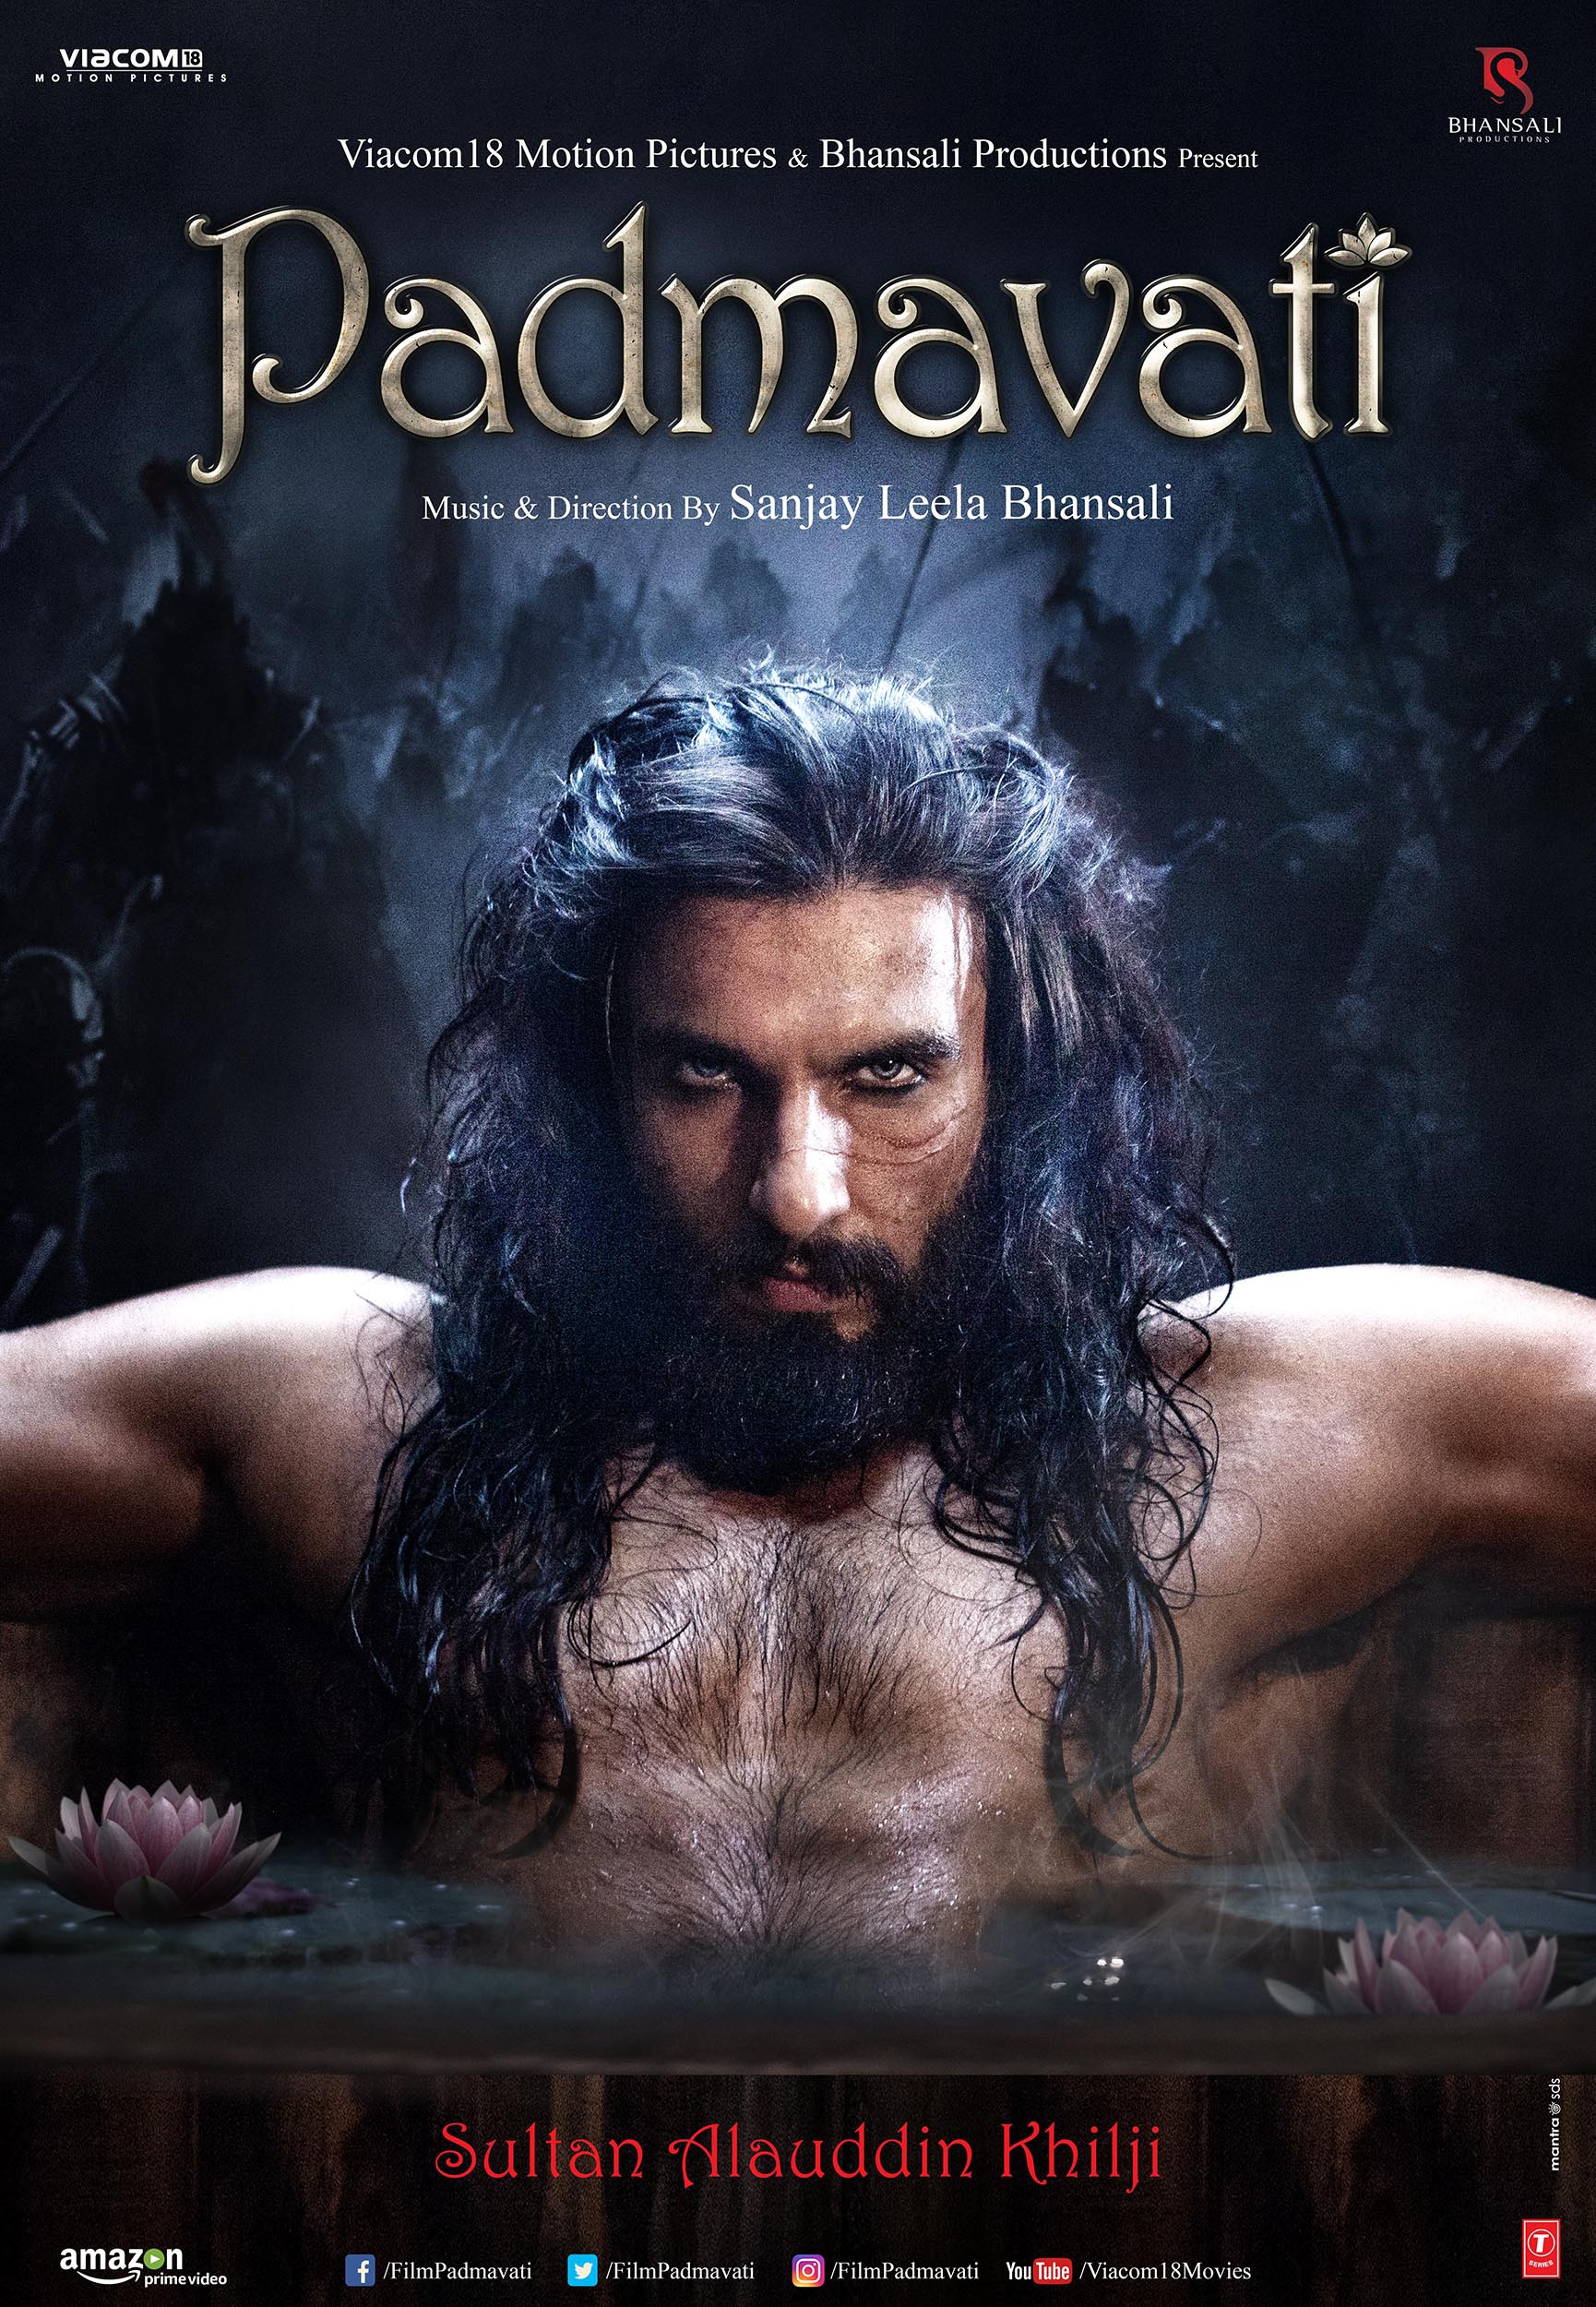 Mega Sized Movie Poster Image for Padmavati (#5 of 9)